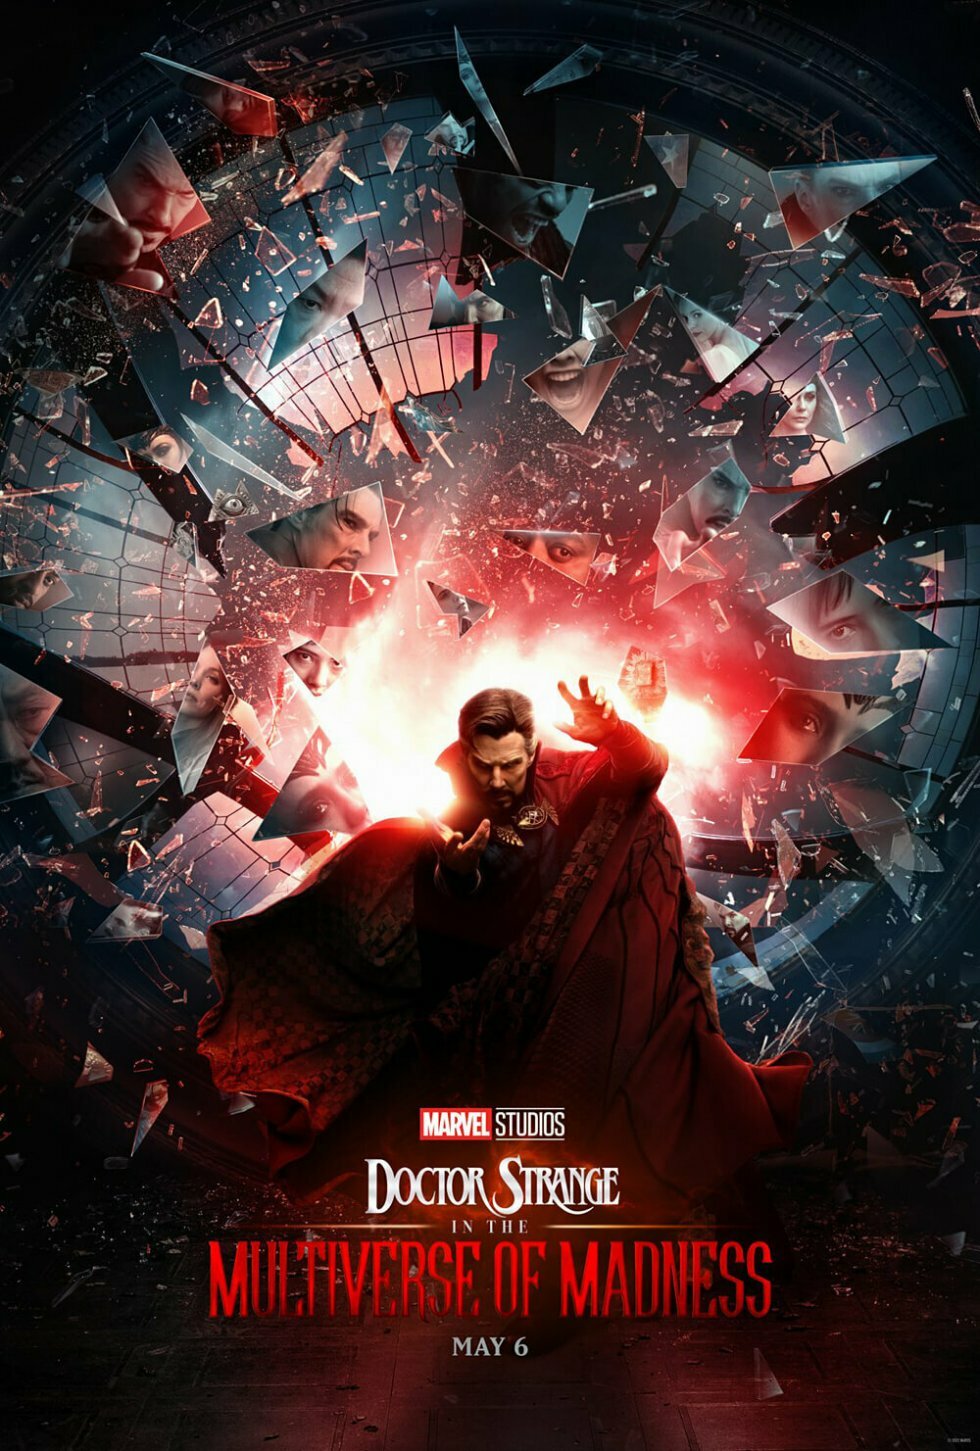 Doctor Strange in the Multiverse of Madness - Marvel Studios - 71 timers film-maraton: I denne rækkefølge skal du se Marvel filmene